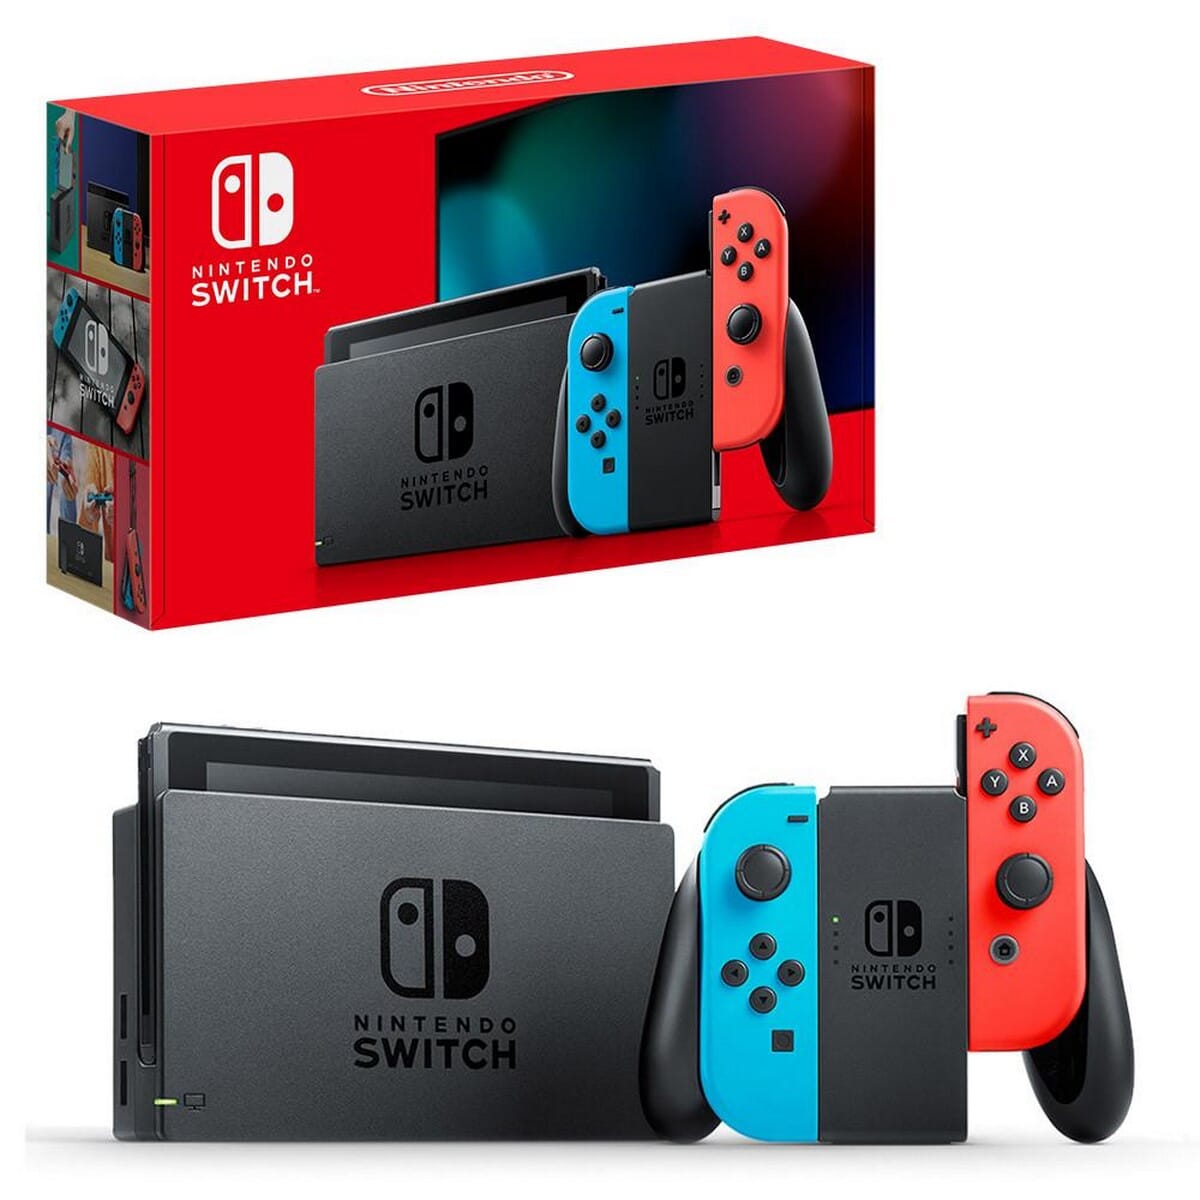 Nintendo v2. Игровая консоль Нинтендо свитч. Игровая консоль Nintendo Switch (серый). Nintendo Switch 32 GB. Nintendo Switch 2018.